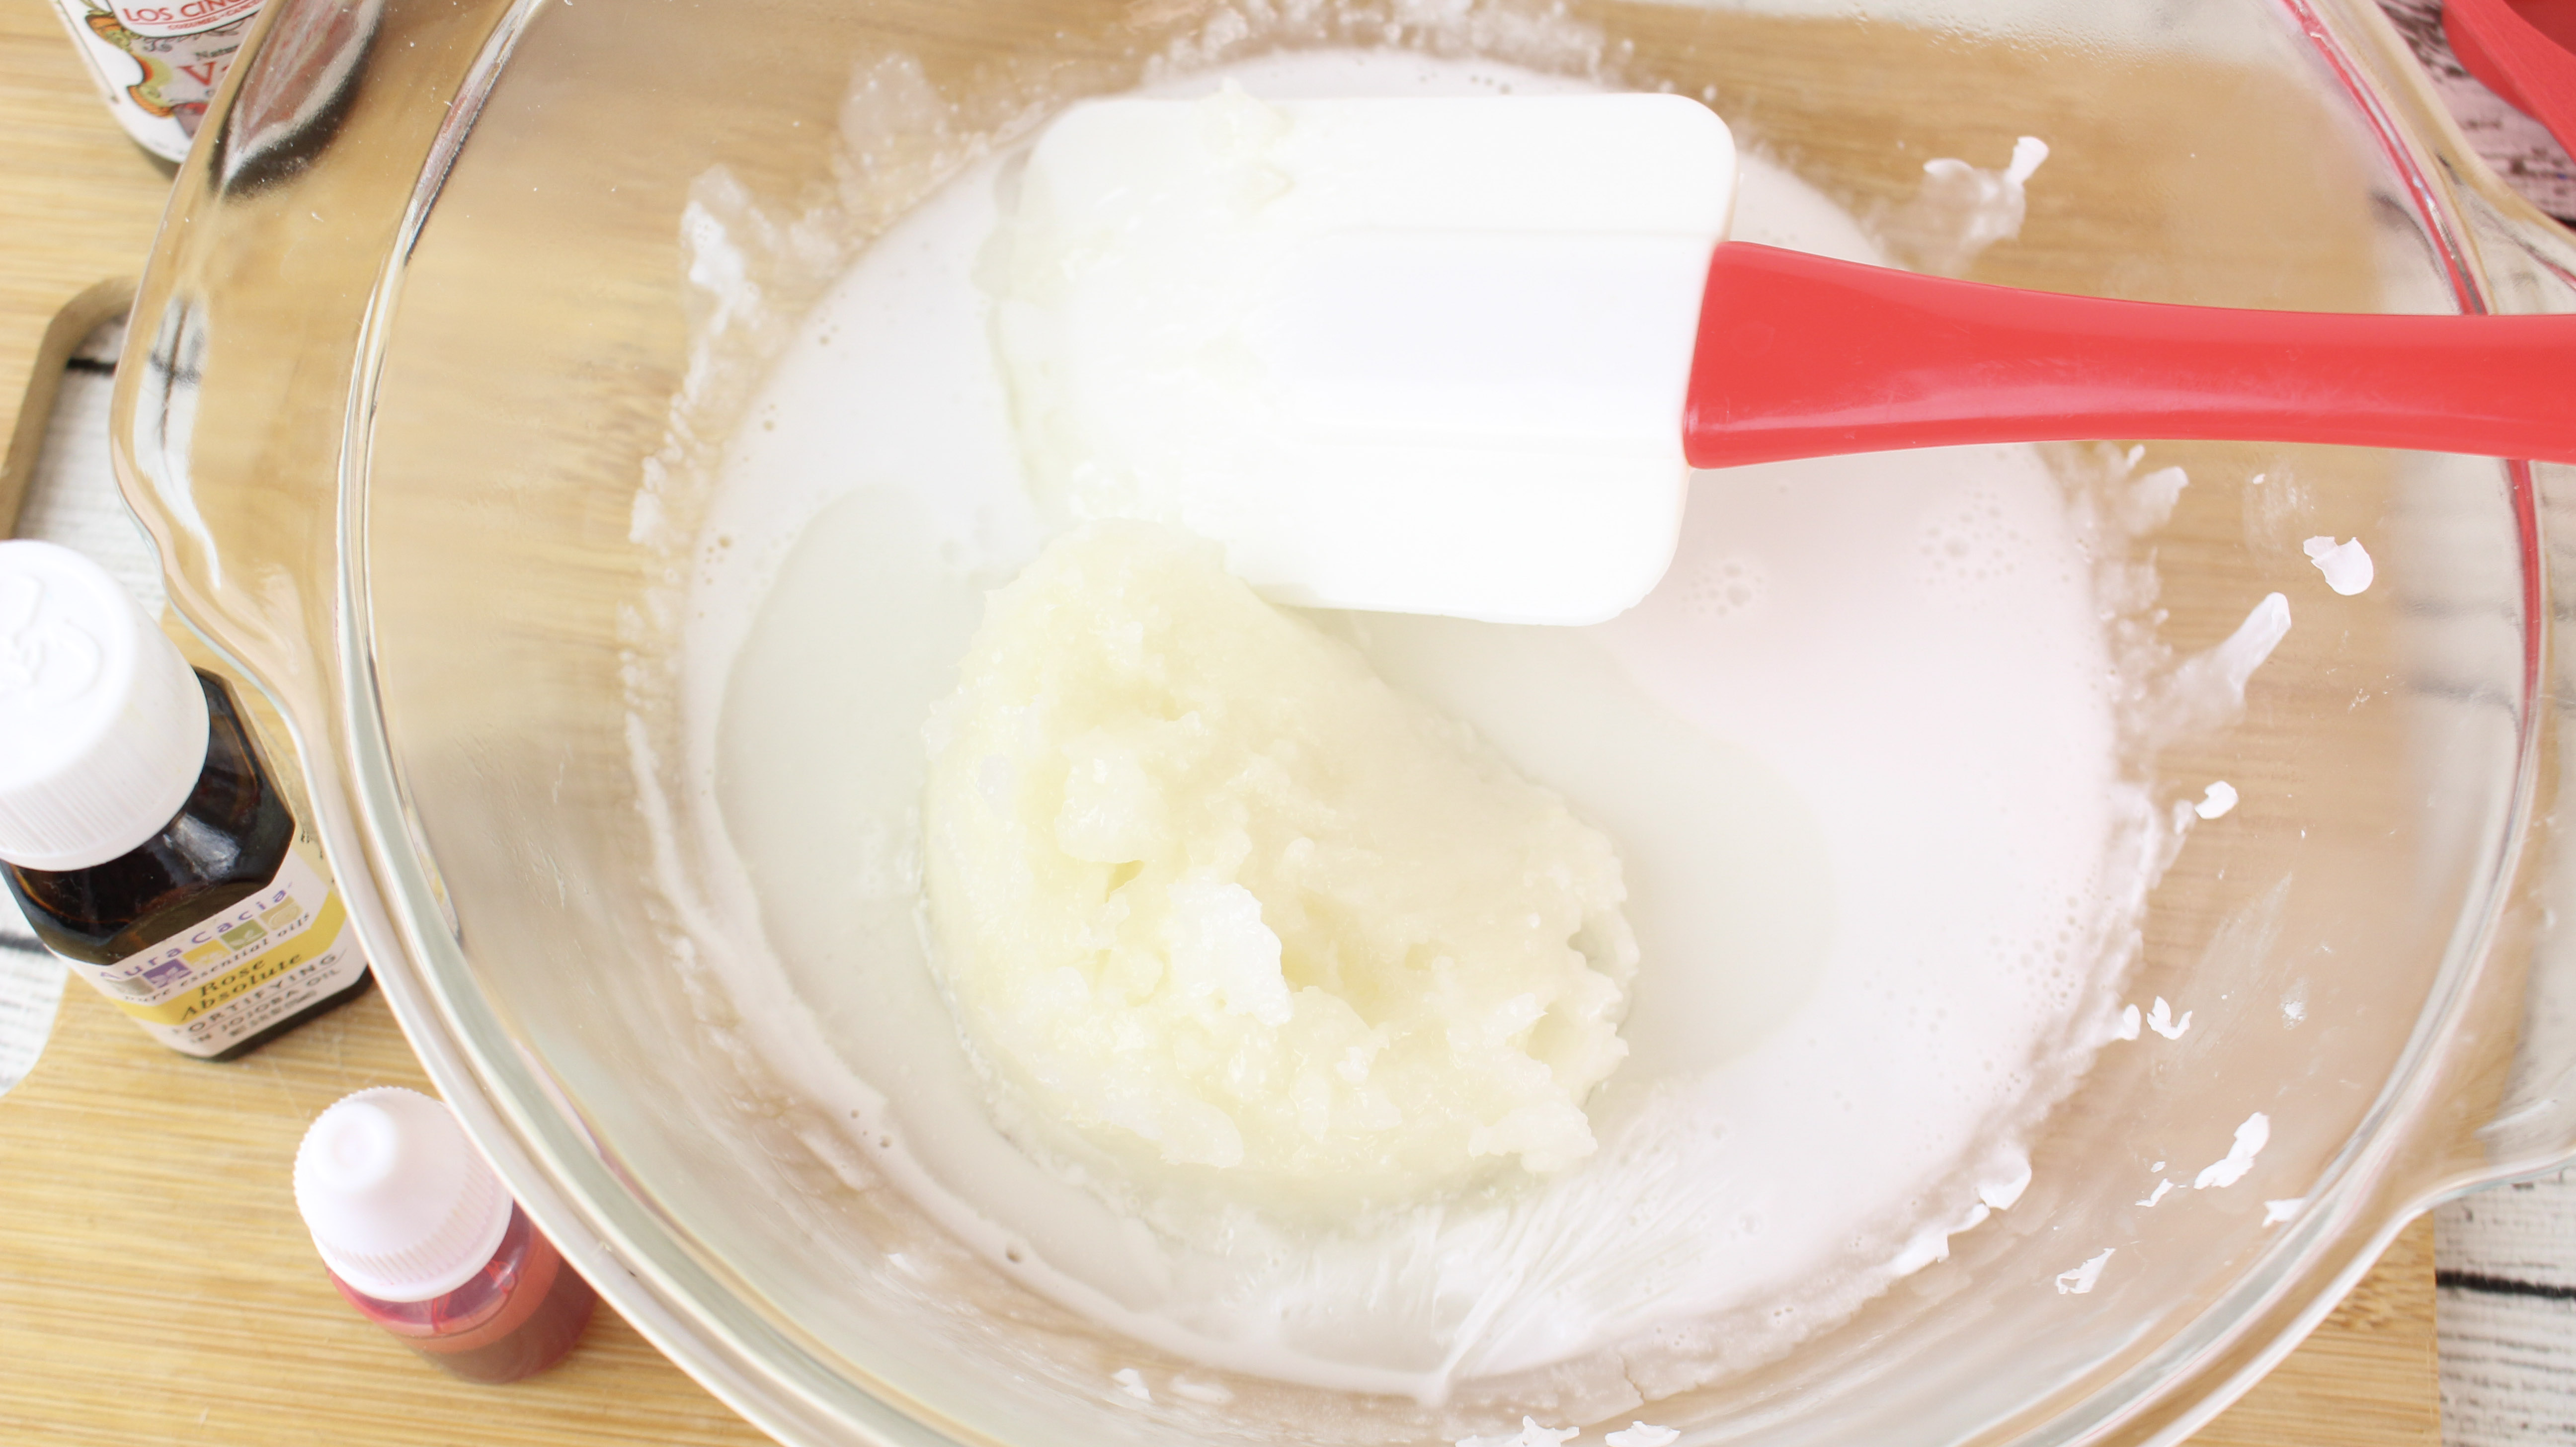 Add coconut oil to the soap to make Rose Vanilla Exfoliating Sugar Scrub Soap Cubes